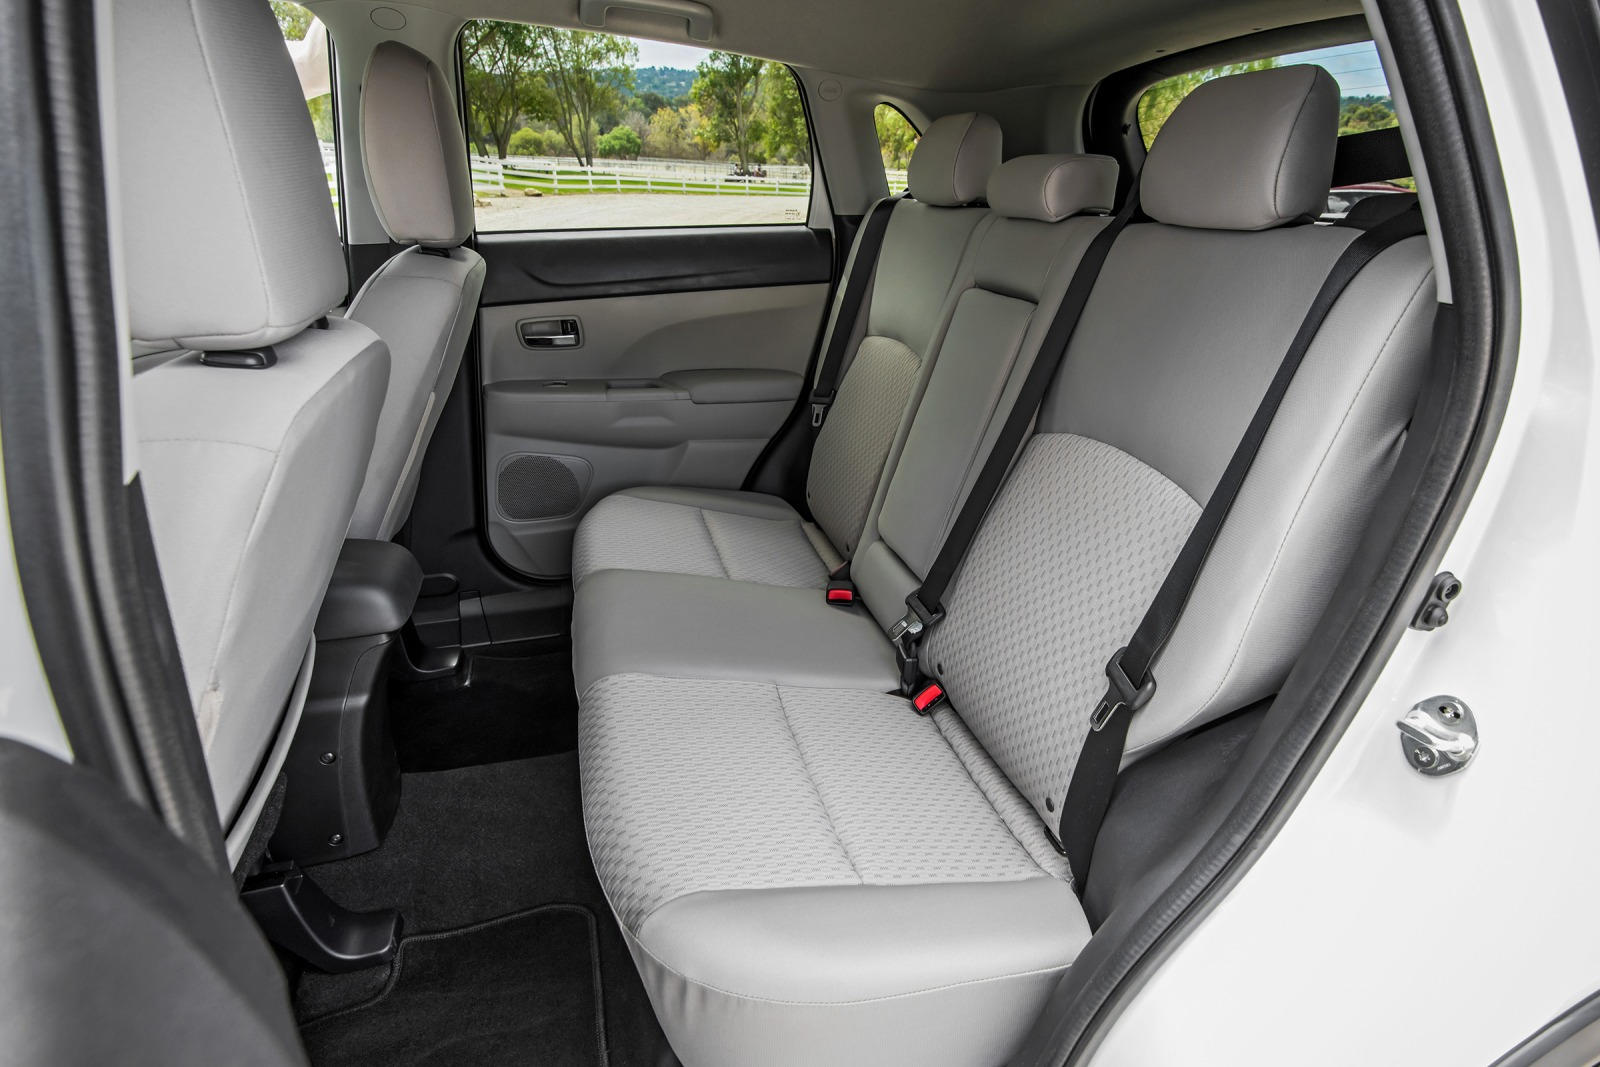 2019 Mitsubishi Outlander Sport Interior Dimensions: Seating, Cargo Space &  Trunk Size - Photos | CarBuzz